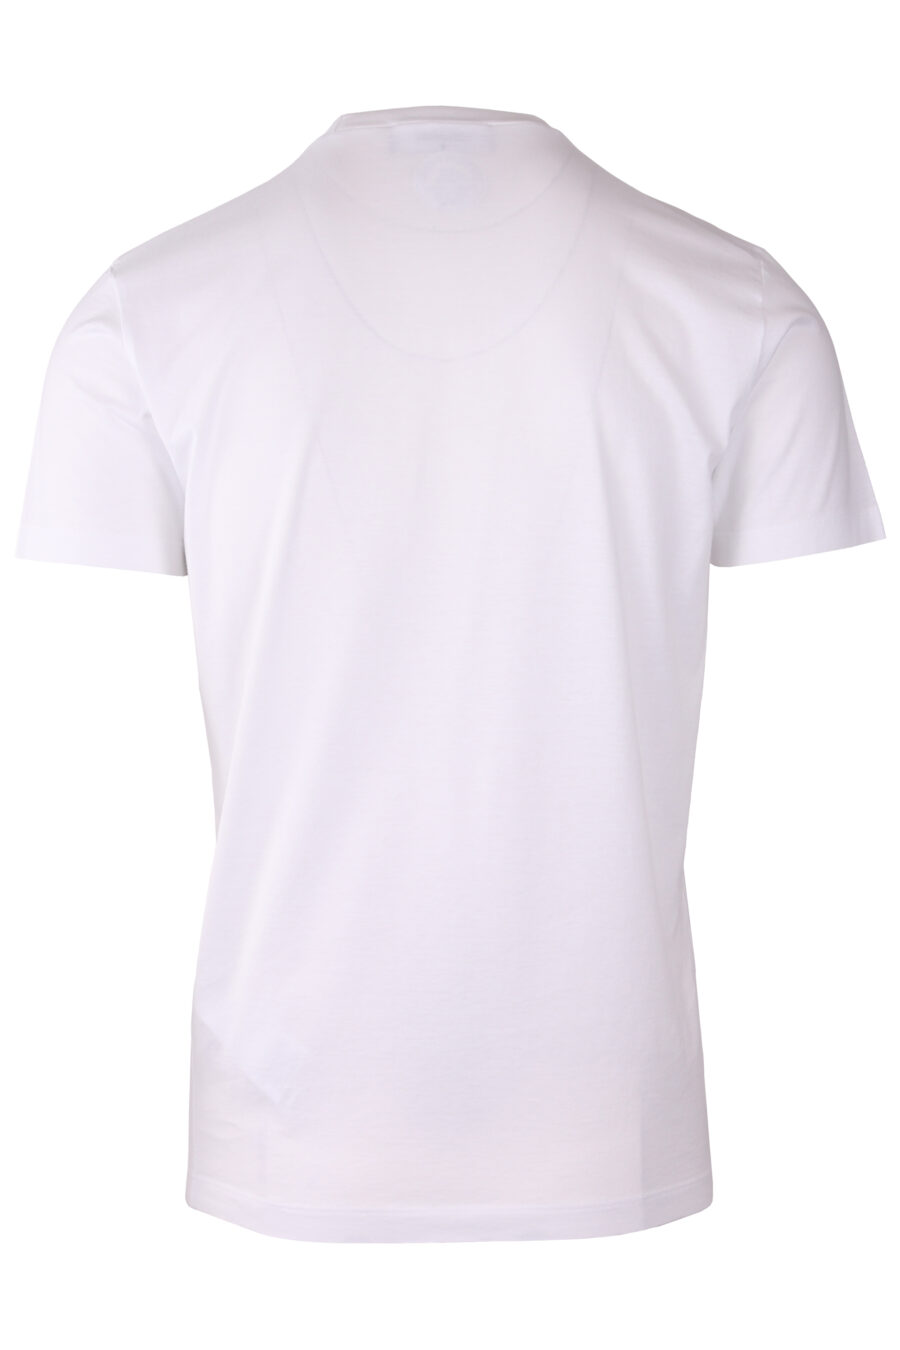 T-shirt branca com texto maxilogo "dean e dan caten" - IMG 8980